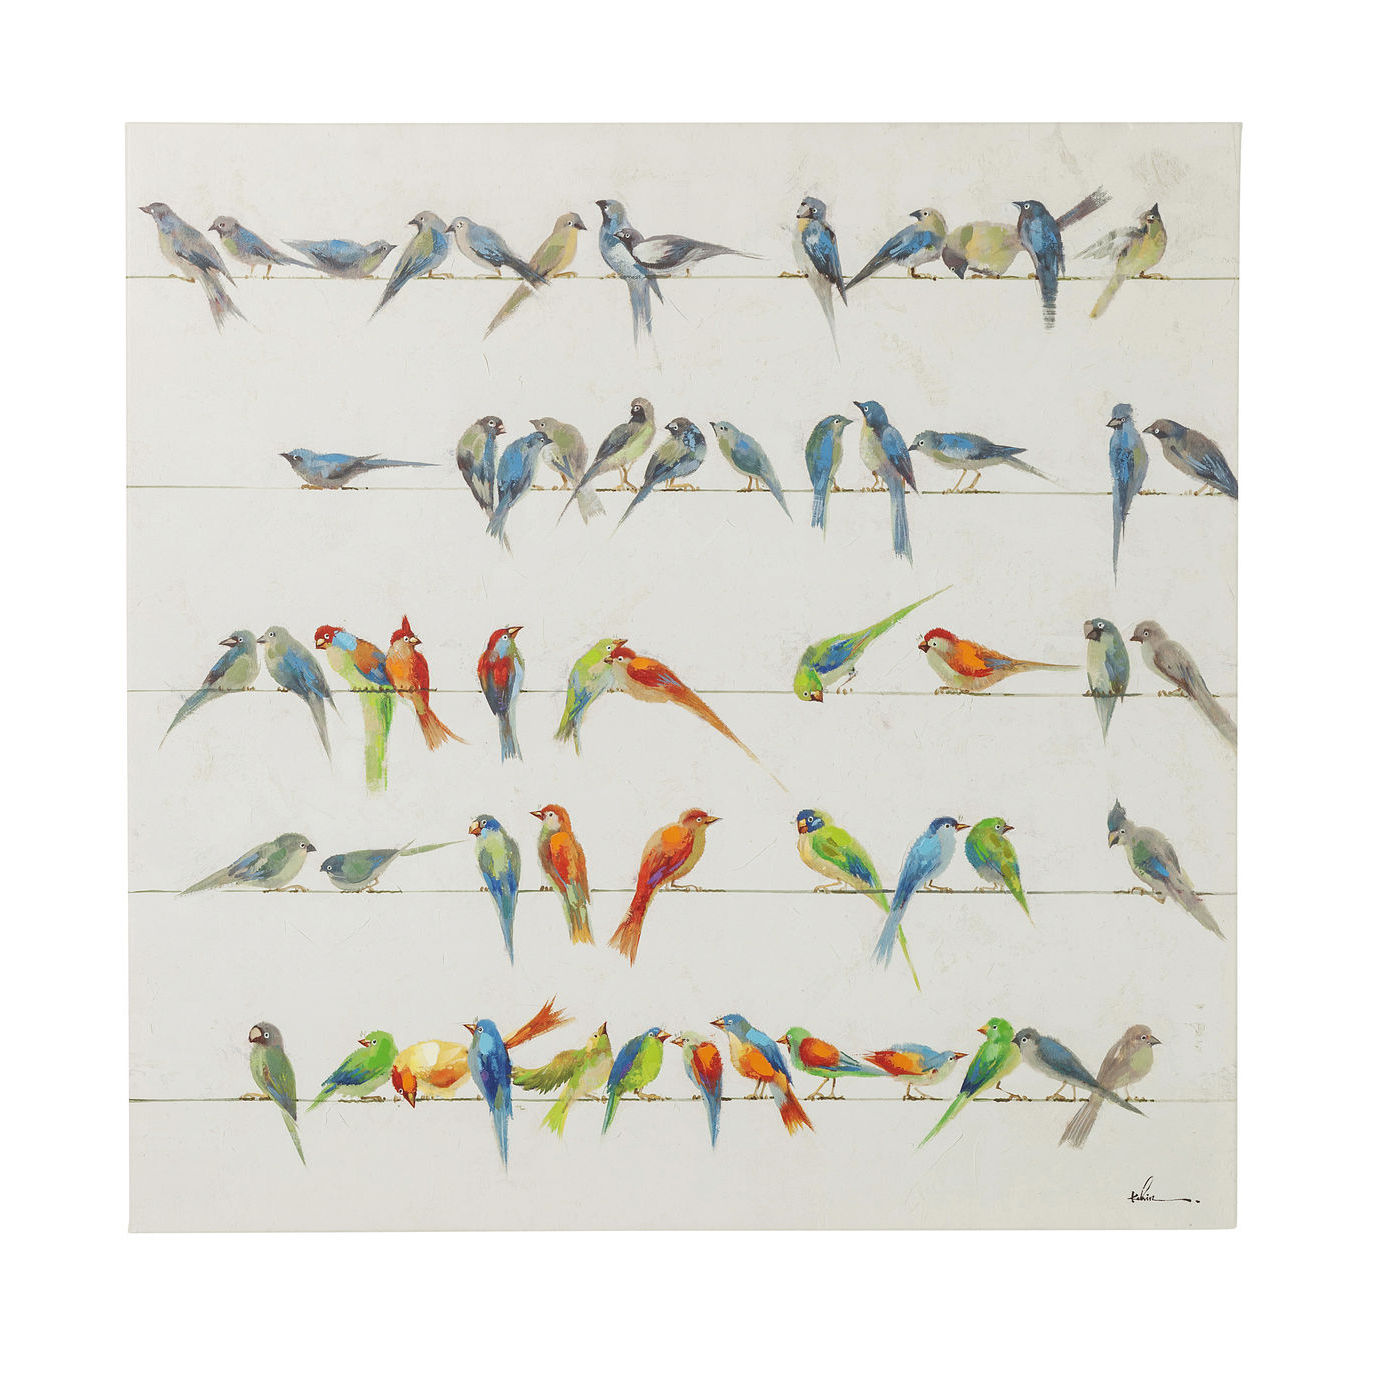 Bild Touched Birds Meeting 100x100cm